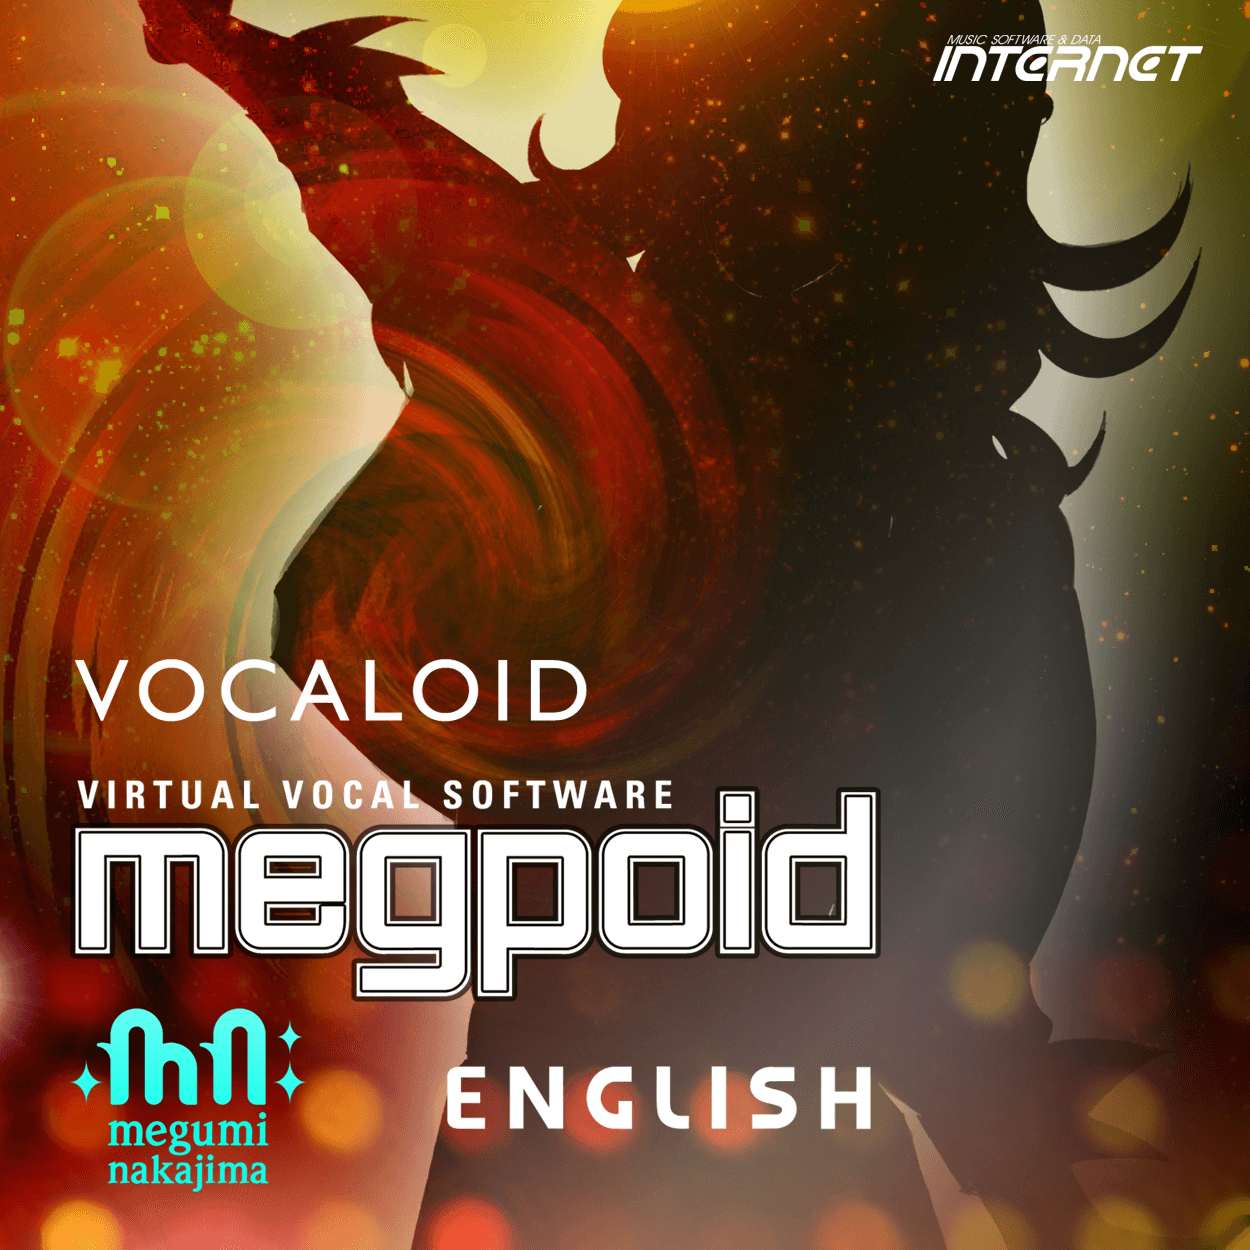 Internet Co. Vocaloid Megpoid English